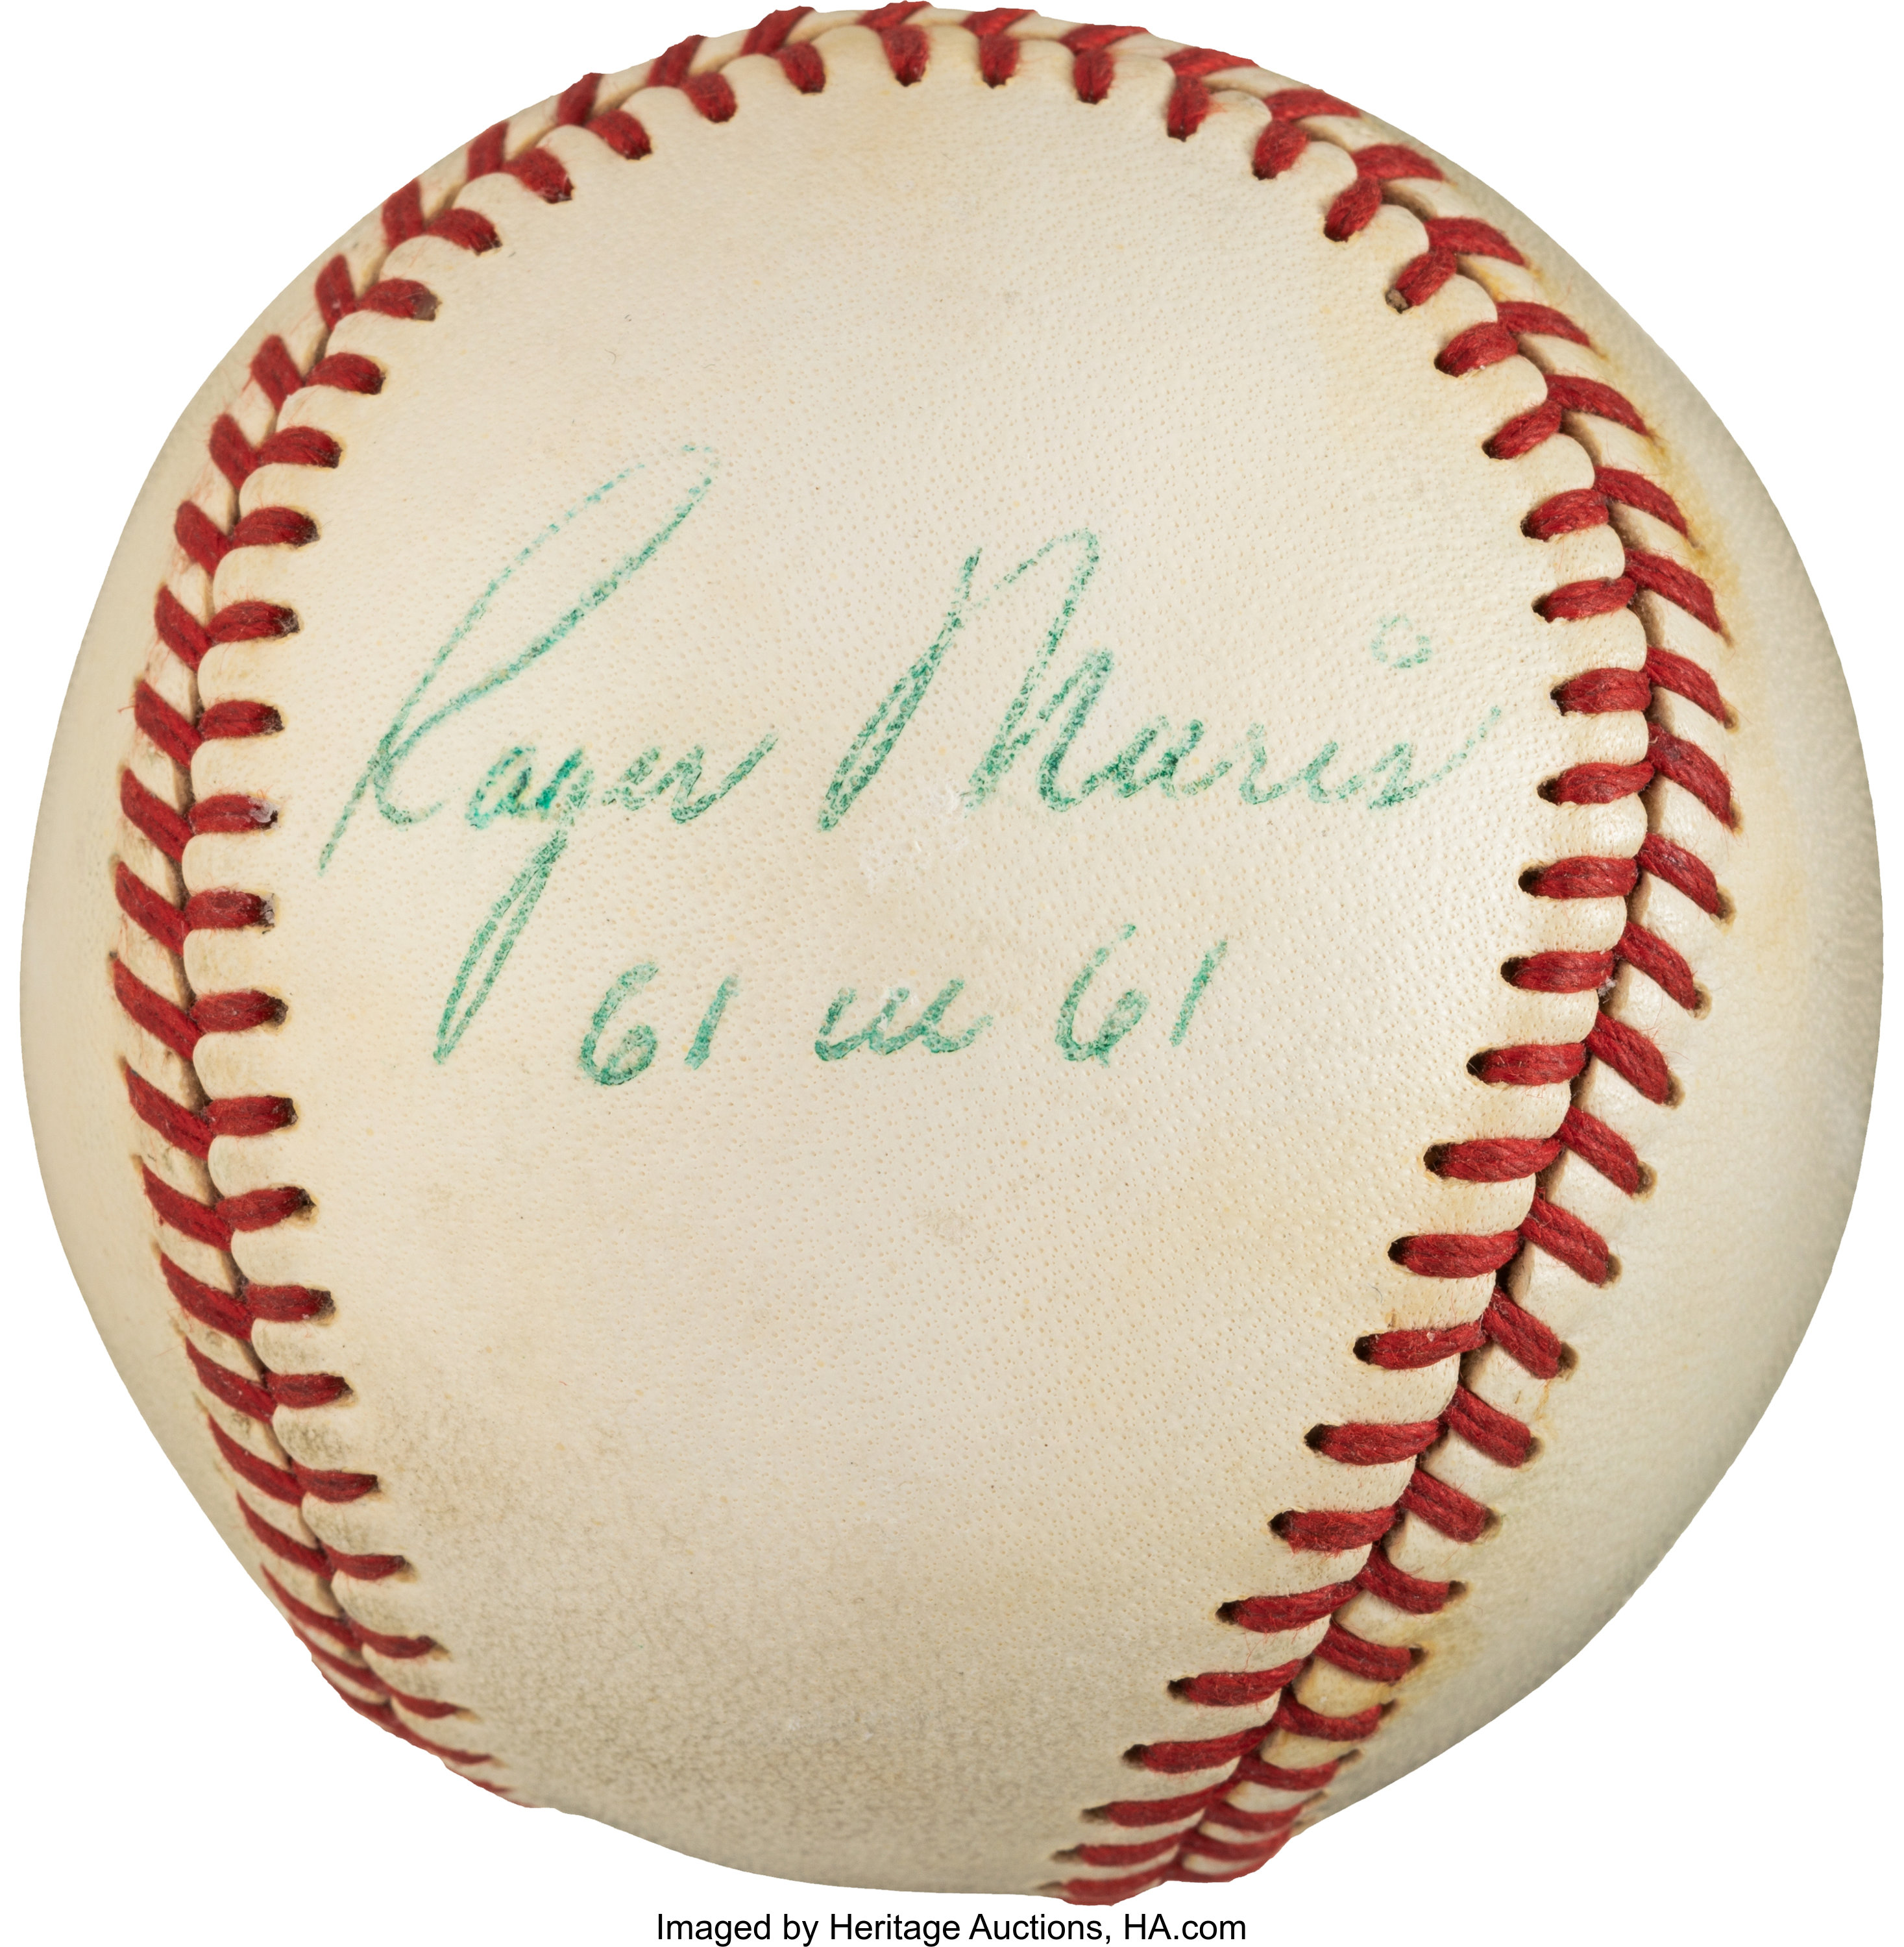 Circa 1961 Roger Maris 61 in 61 Single Signed Baseball.